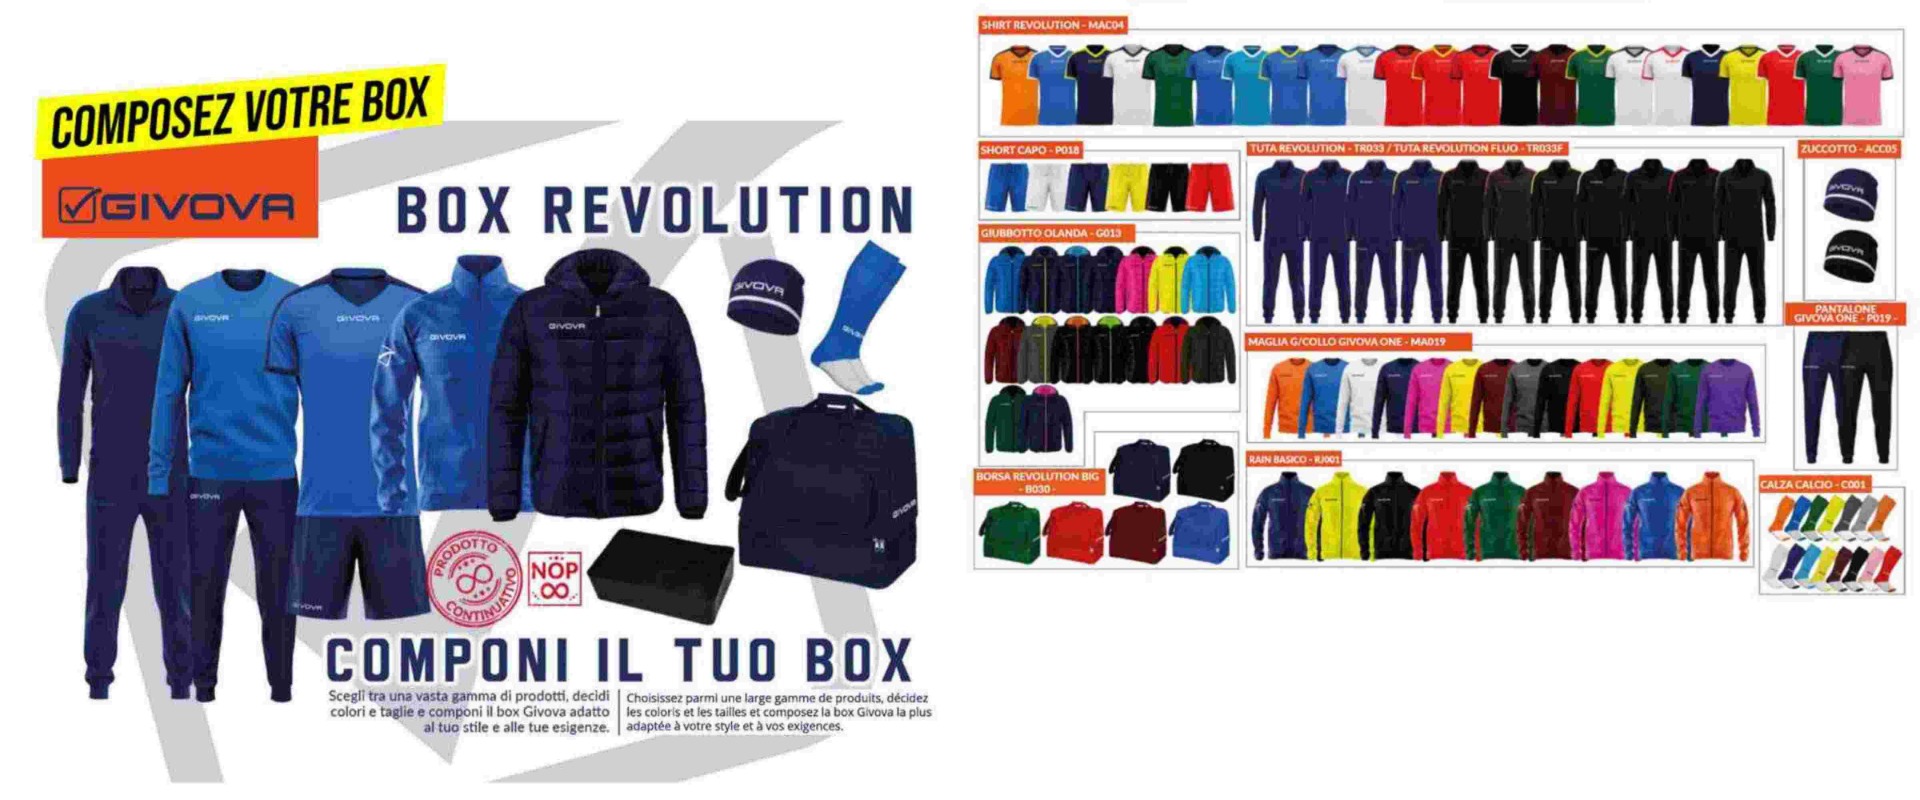 box revolution (no price).jpg